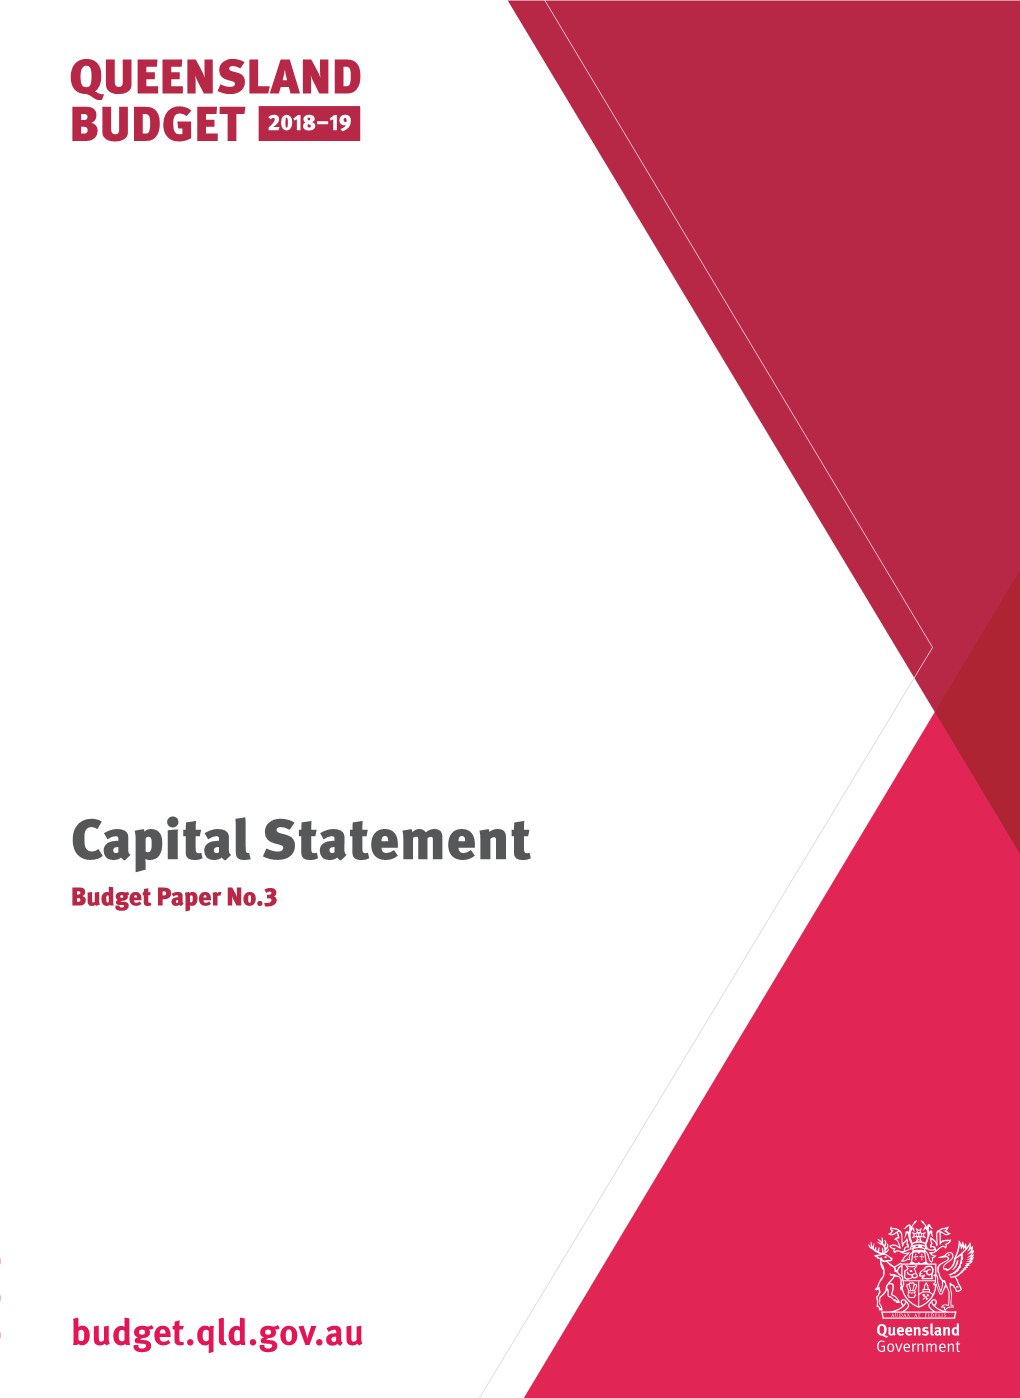 Capital Statement Capital